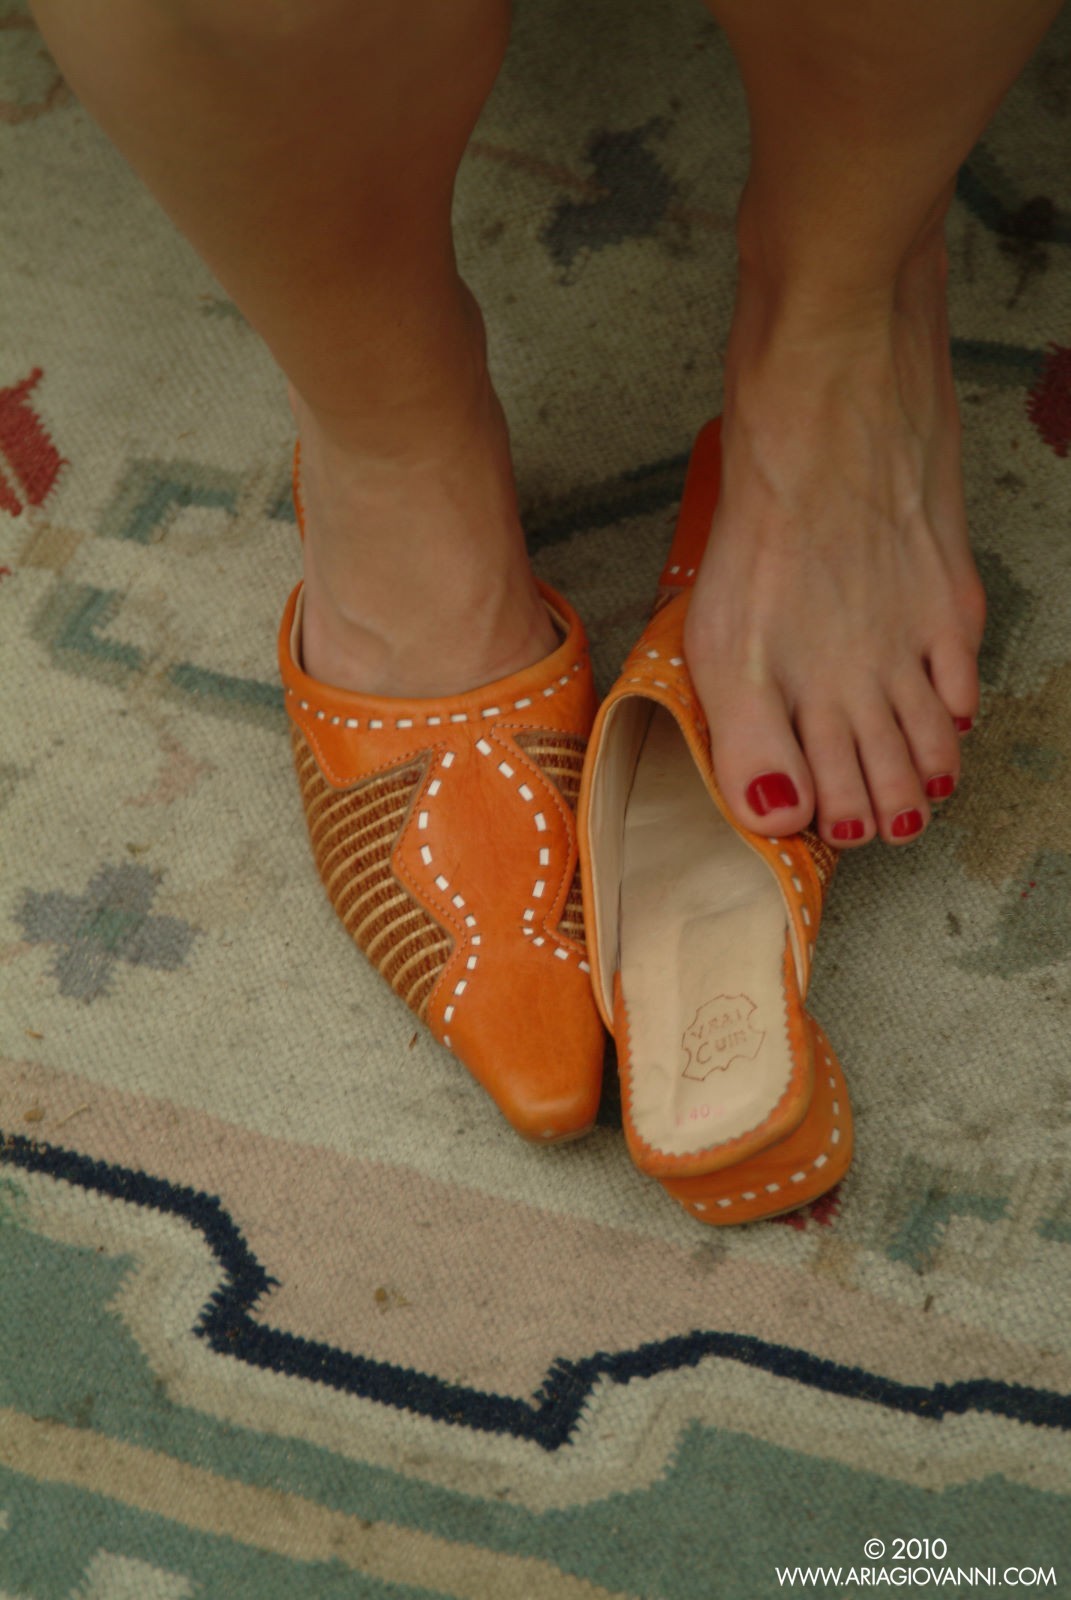 Aria Giovanni Feet - Aria Giovanni's Feet << wikiFeet X